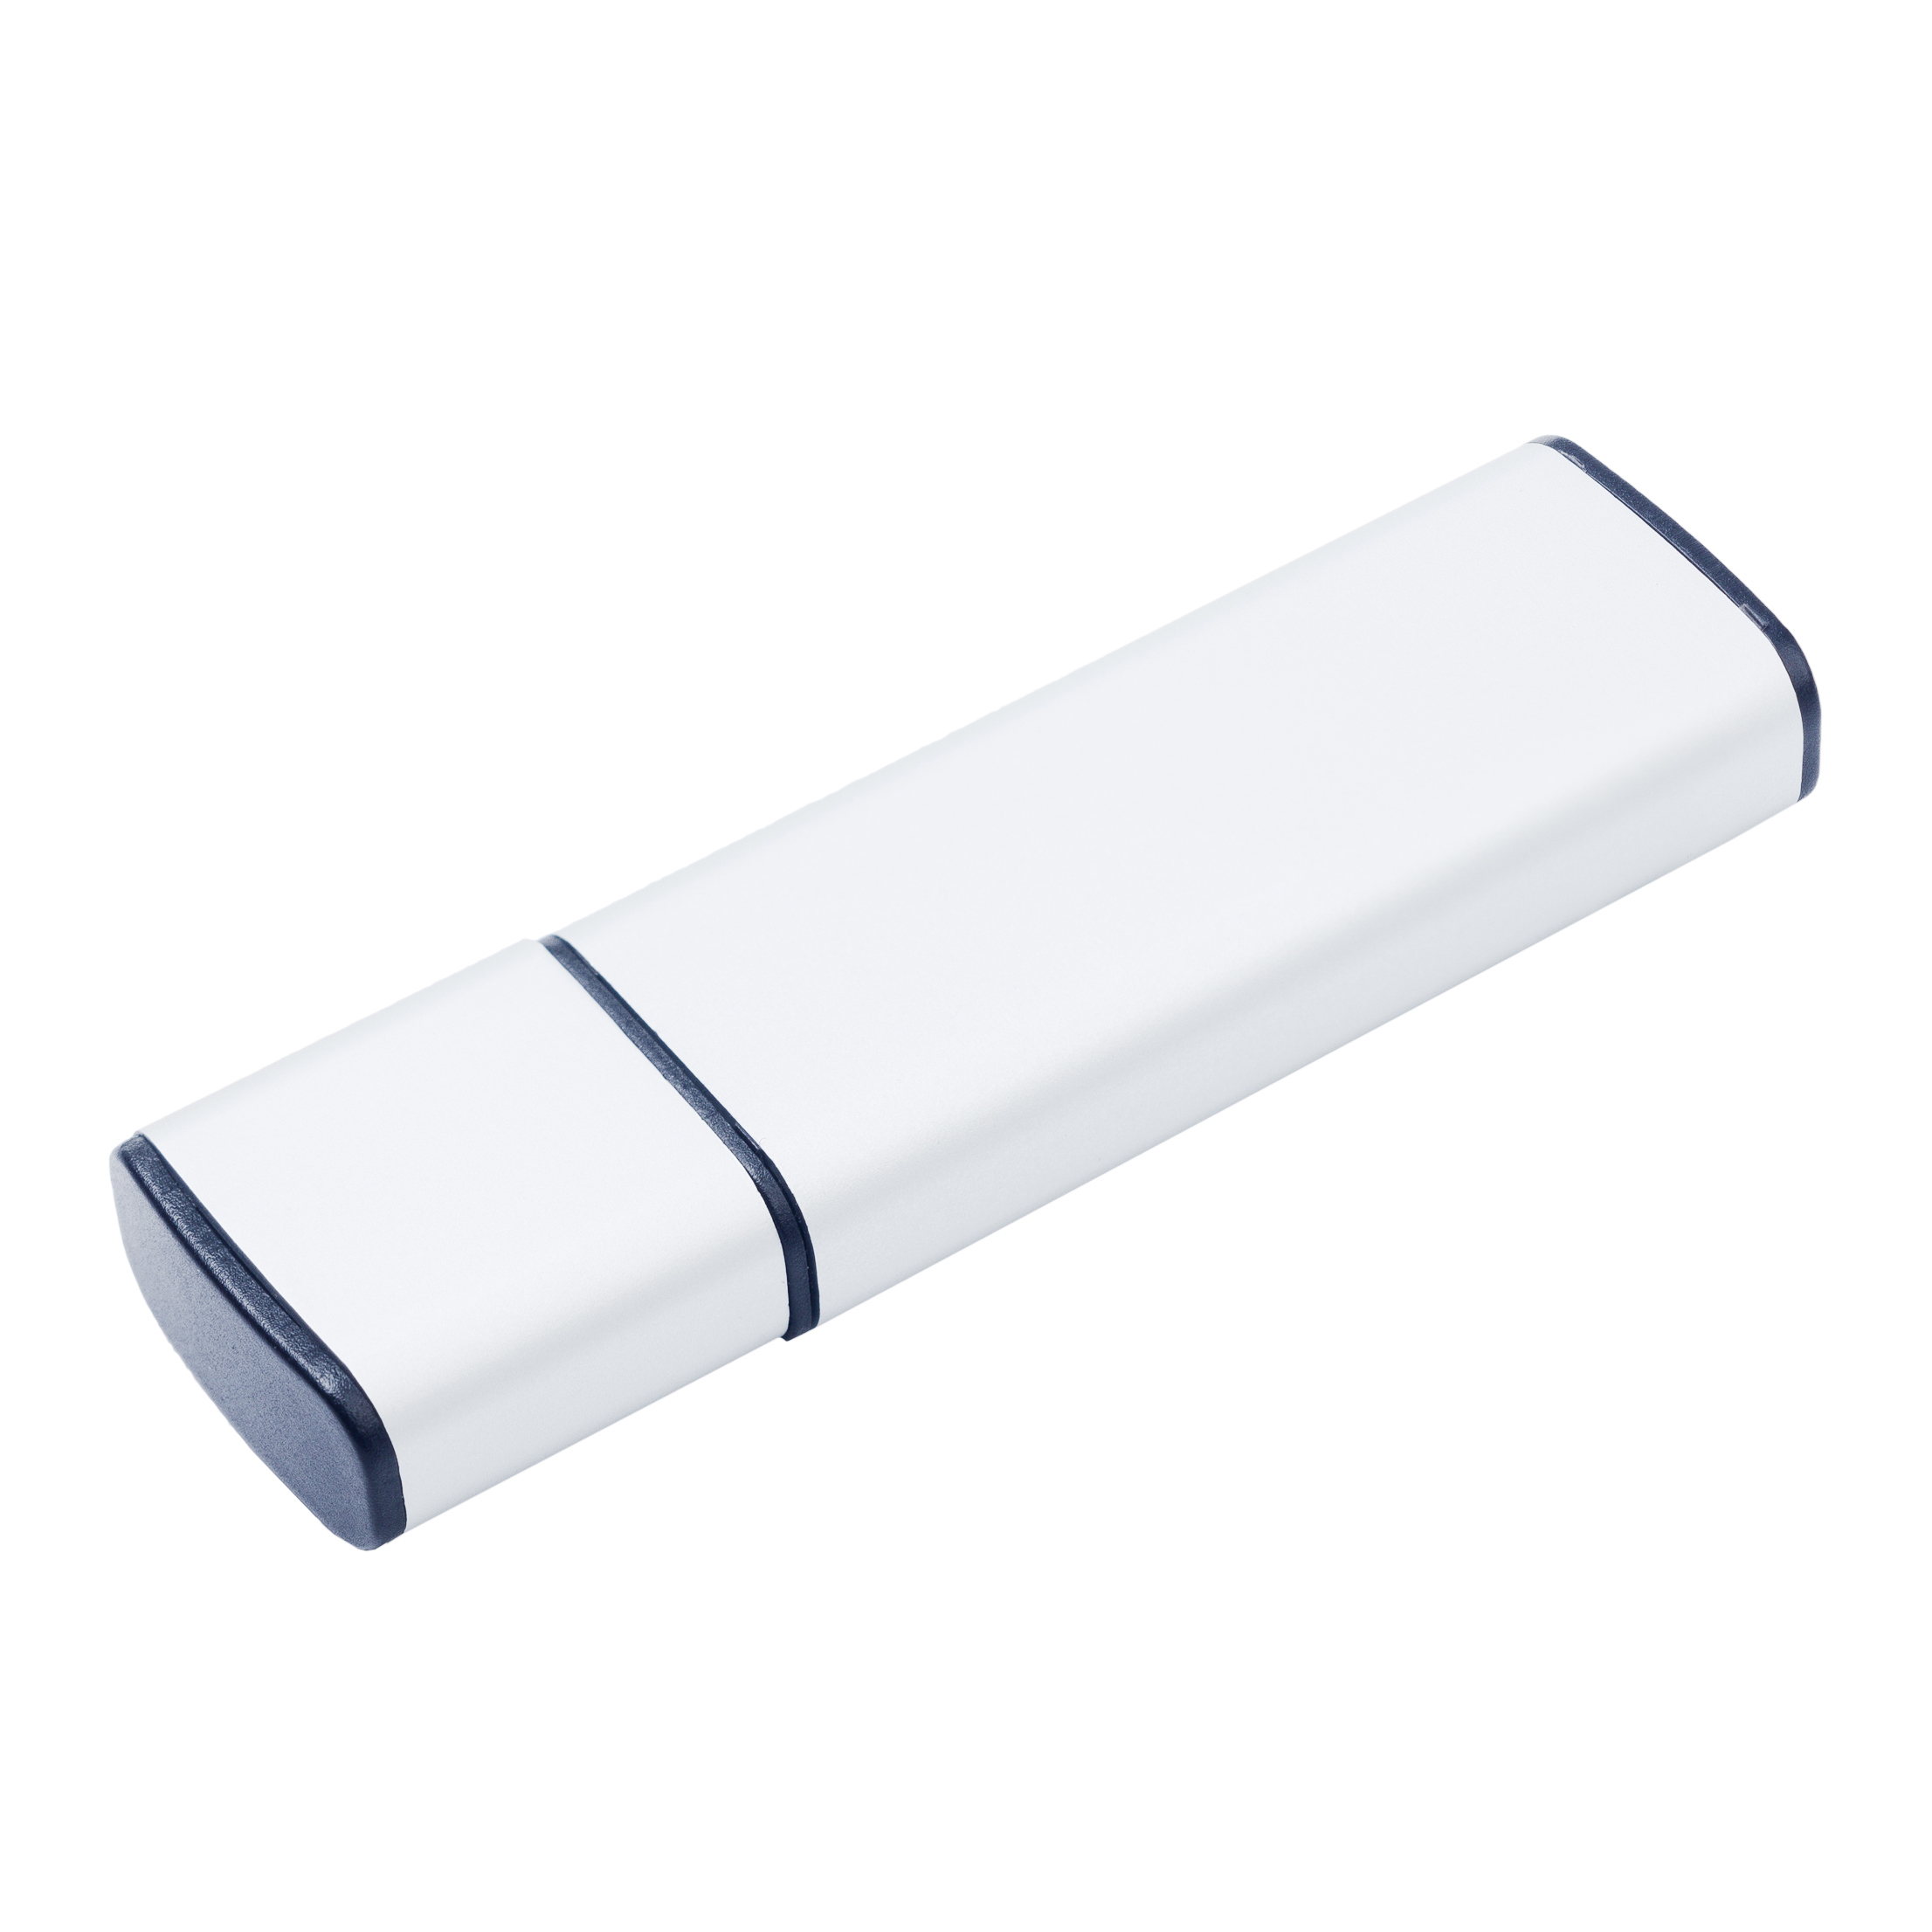 USB-флешка модель 122, (USB 3.0), объем памяти 16 GB, цвет белый